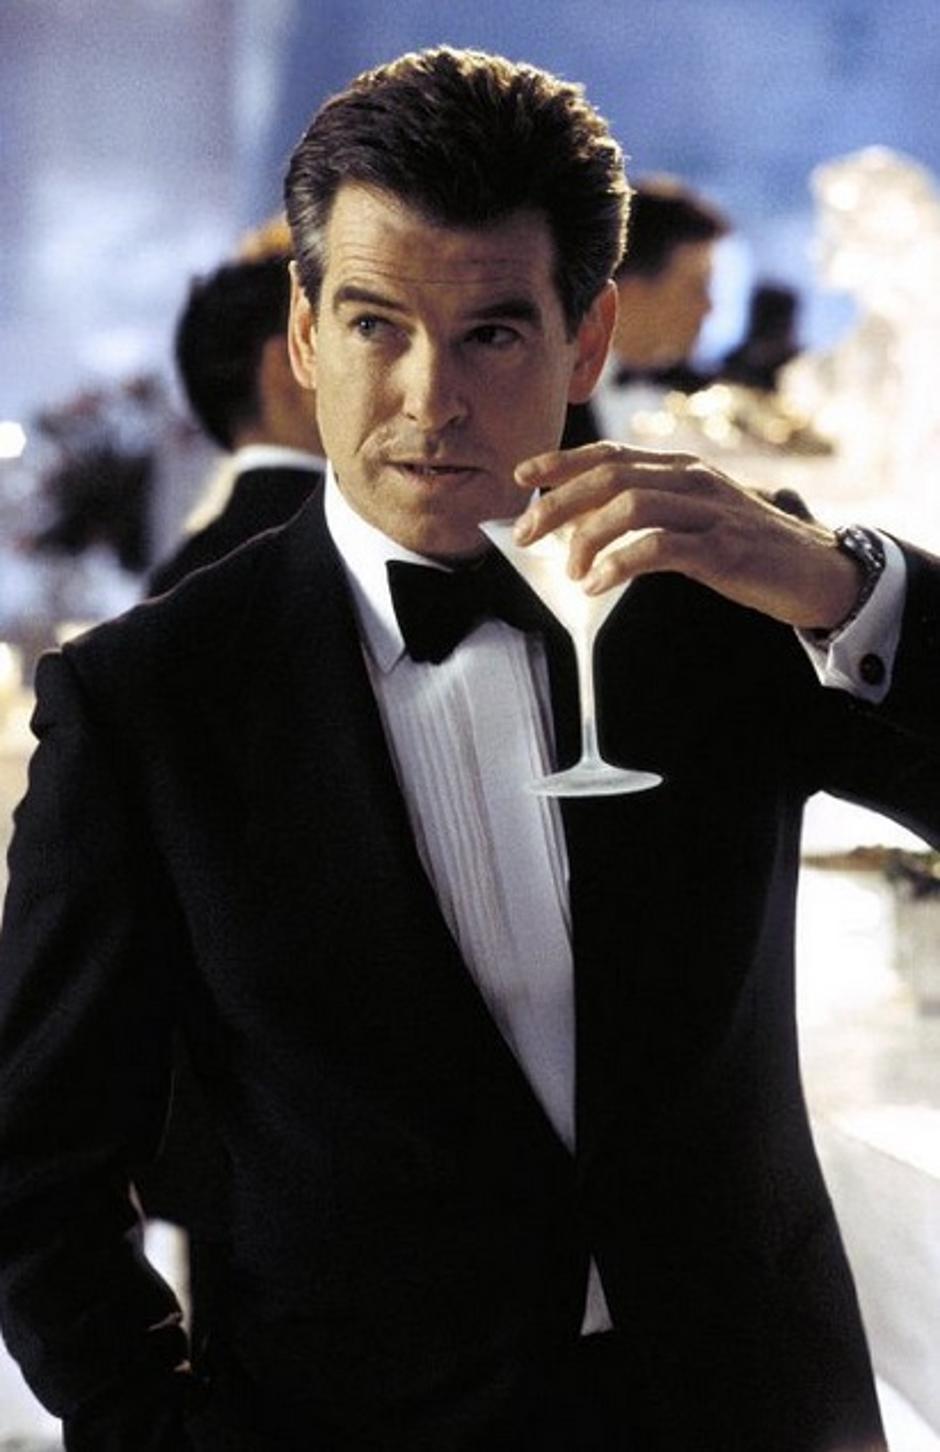 James Bond | Author: 20th Century Fox